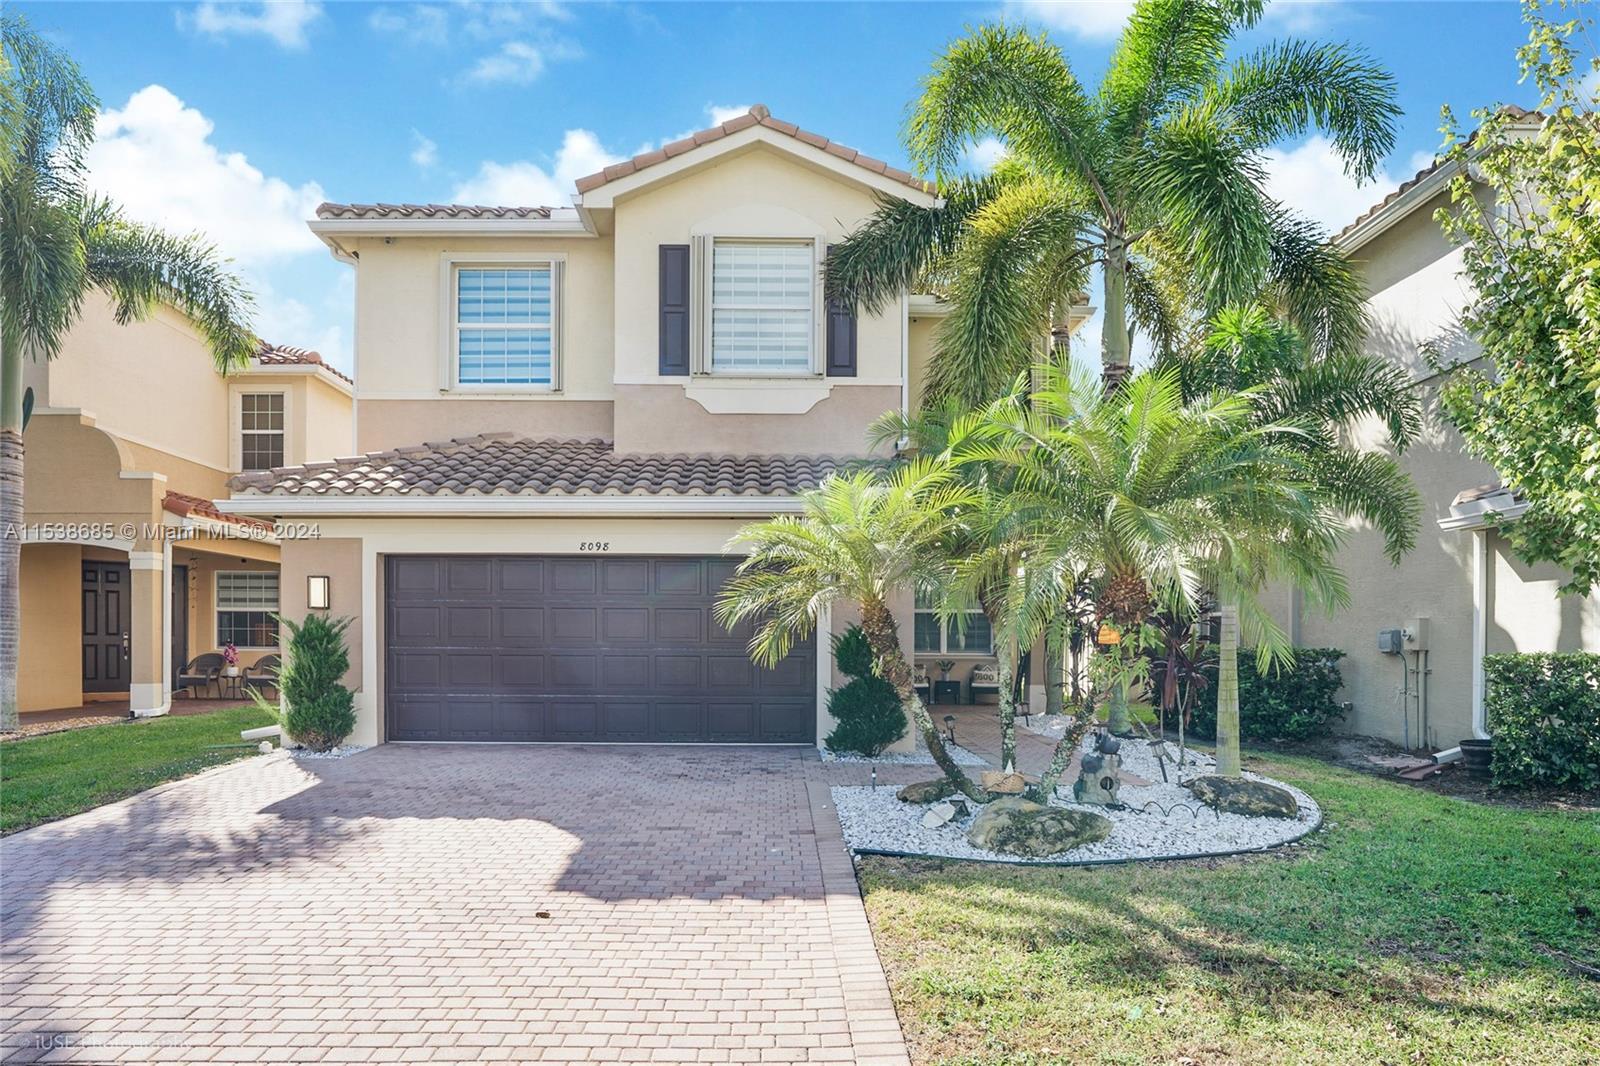 Property for Sale at 8098 Brigamar Isles Ave, Boynton Beach, Palm Beach County, Florida - Bedrooms: 4 
Bathrooms: 4  - $859,000